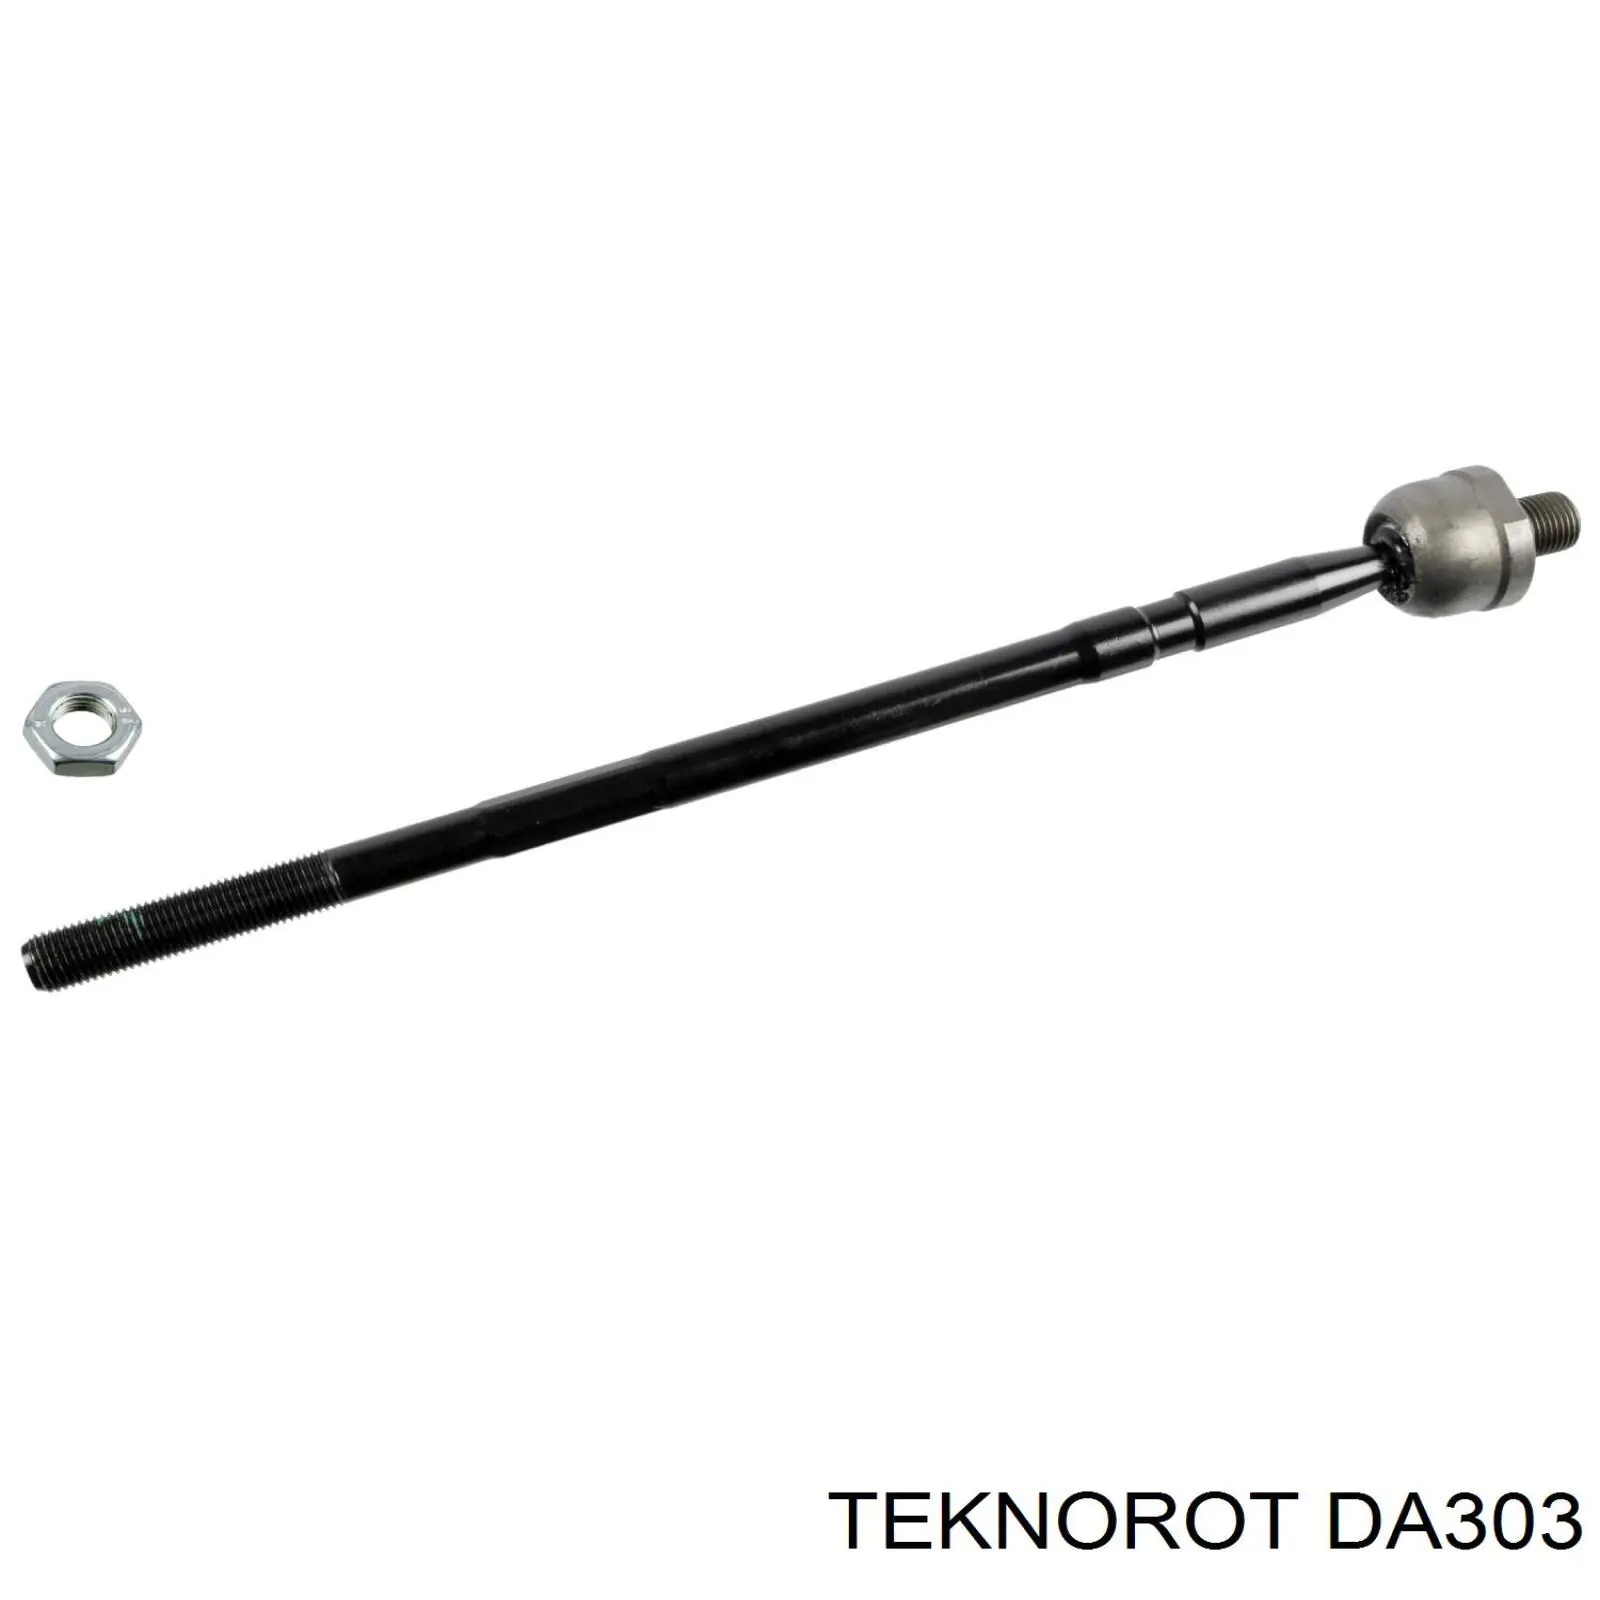 DA303 Teknorot barra de acoplamiento